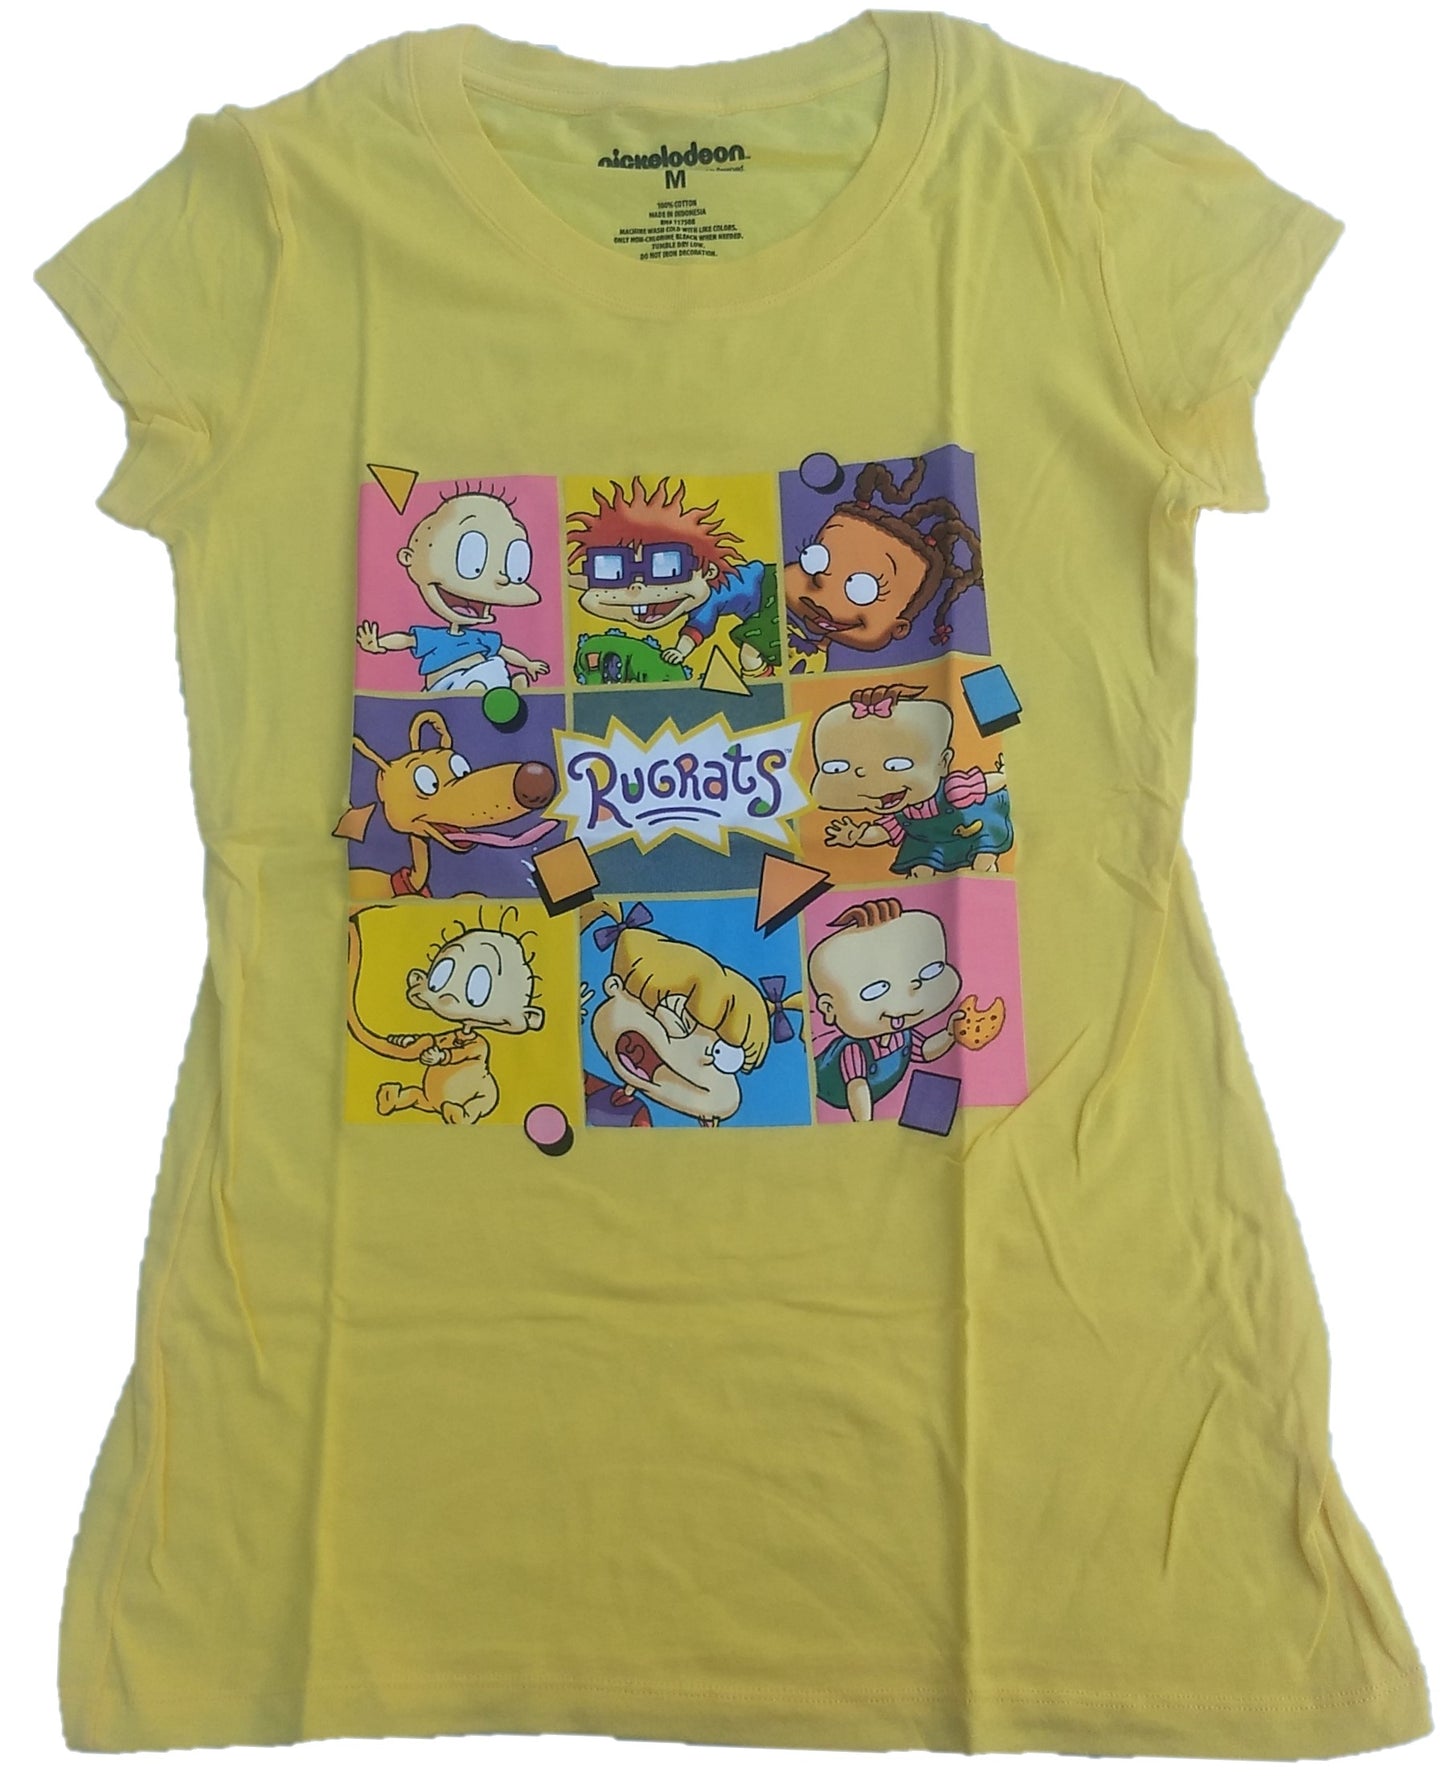 Nickelodeon Rugrats Cast of Characters Juniors T-Shirt (Yellow)